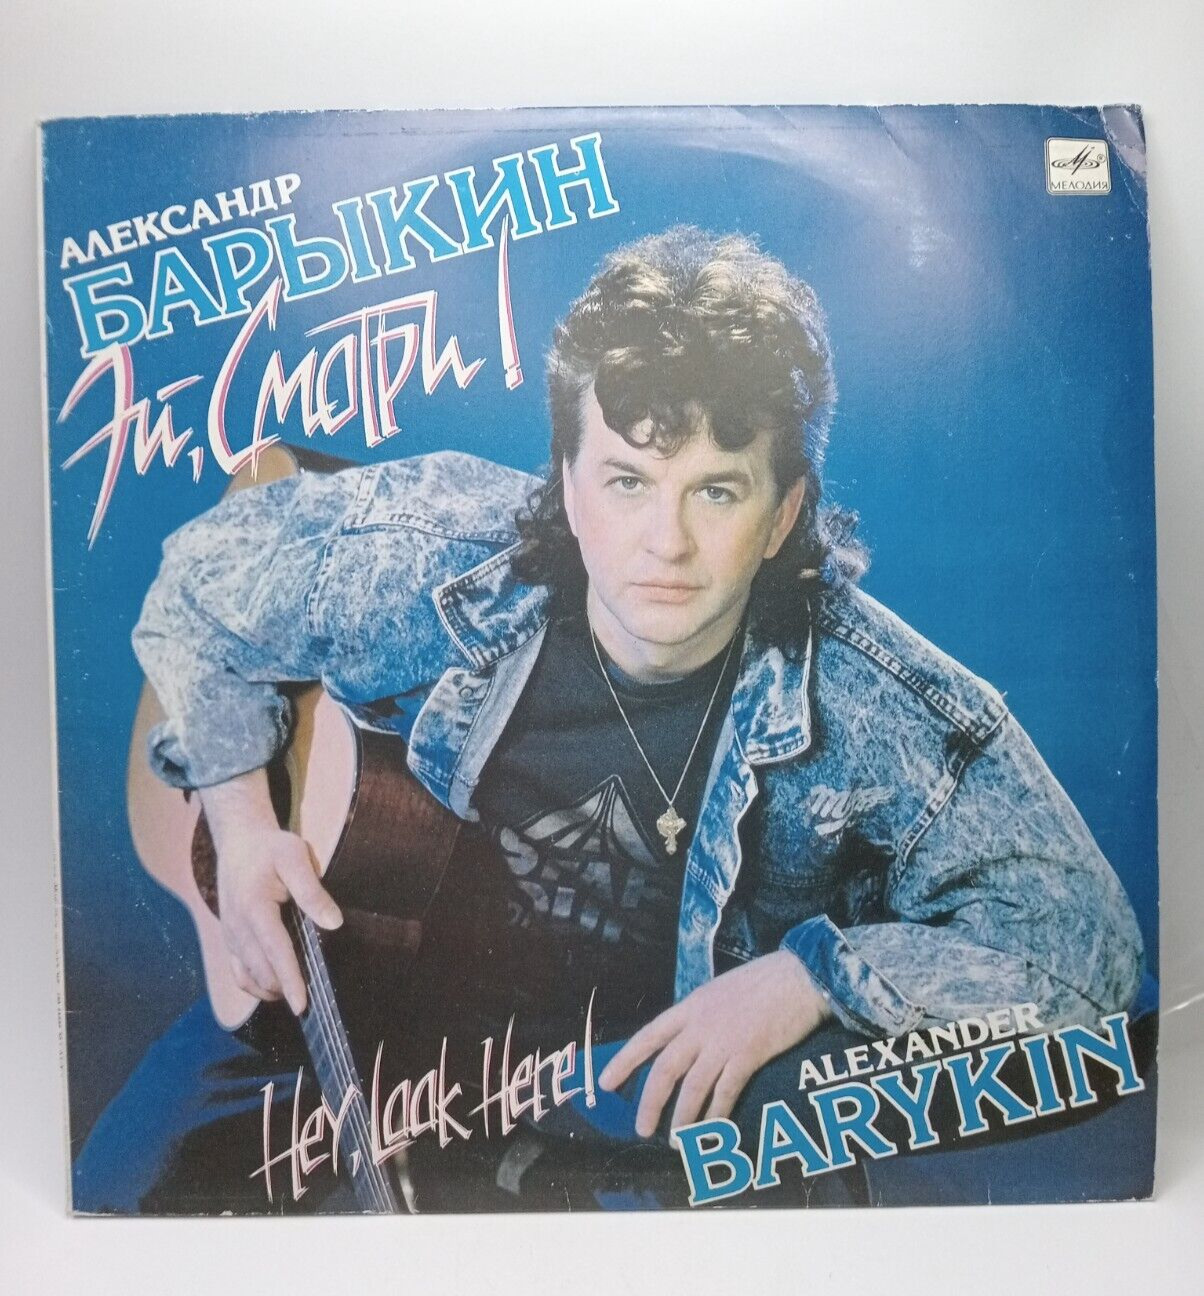 USSR Vinyl Record Alexander Barykin Hey, Look Here Collectible Vintage Soviet